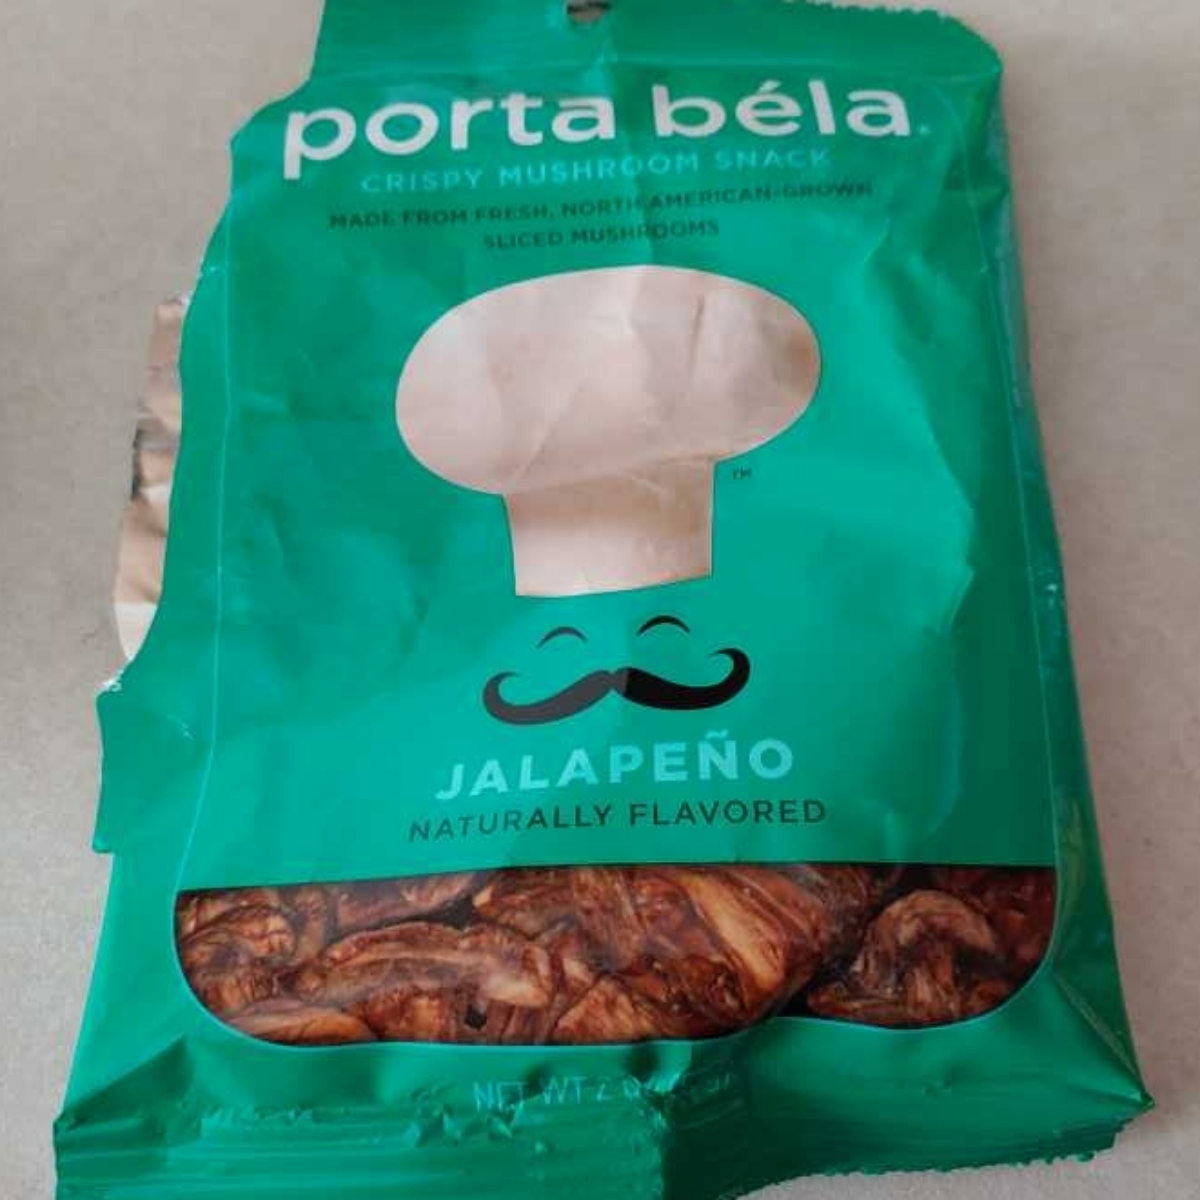 Porta béla Crispy Mushroom Snack Jalapeno Reviews